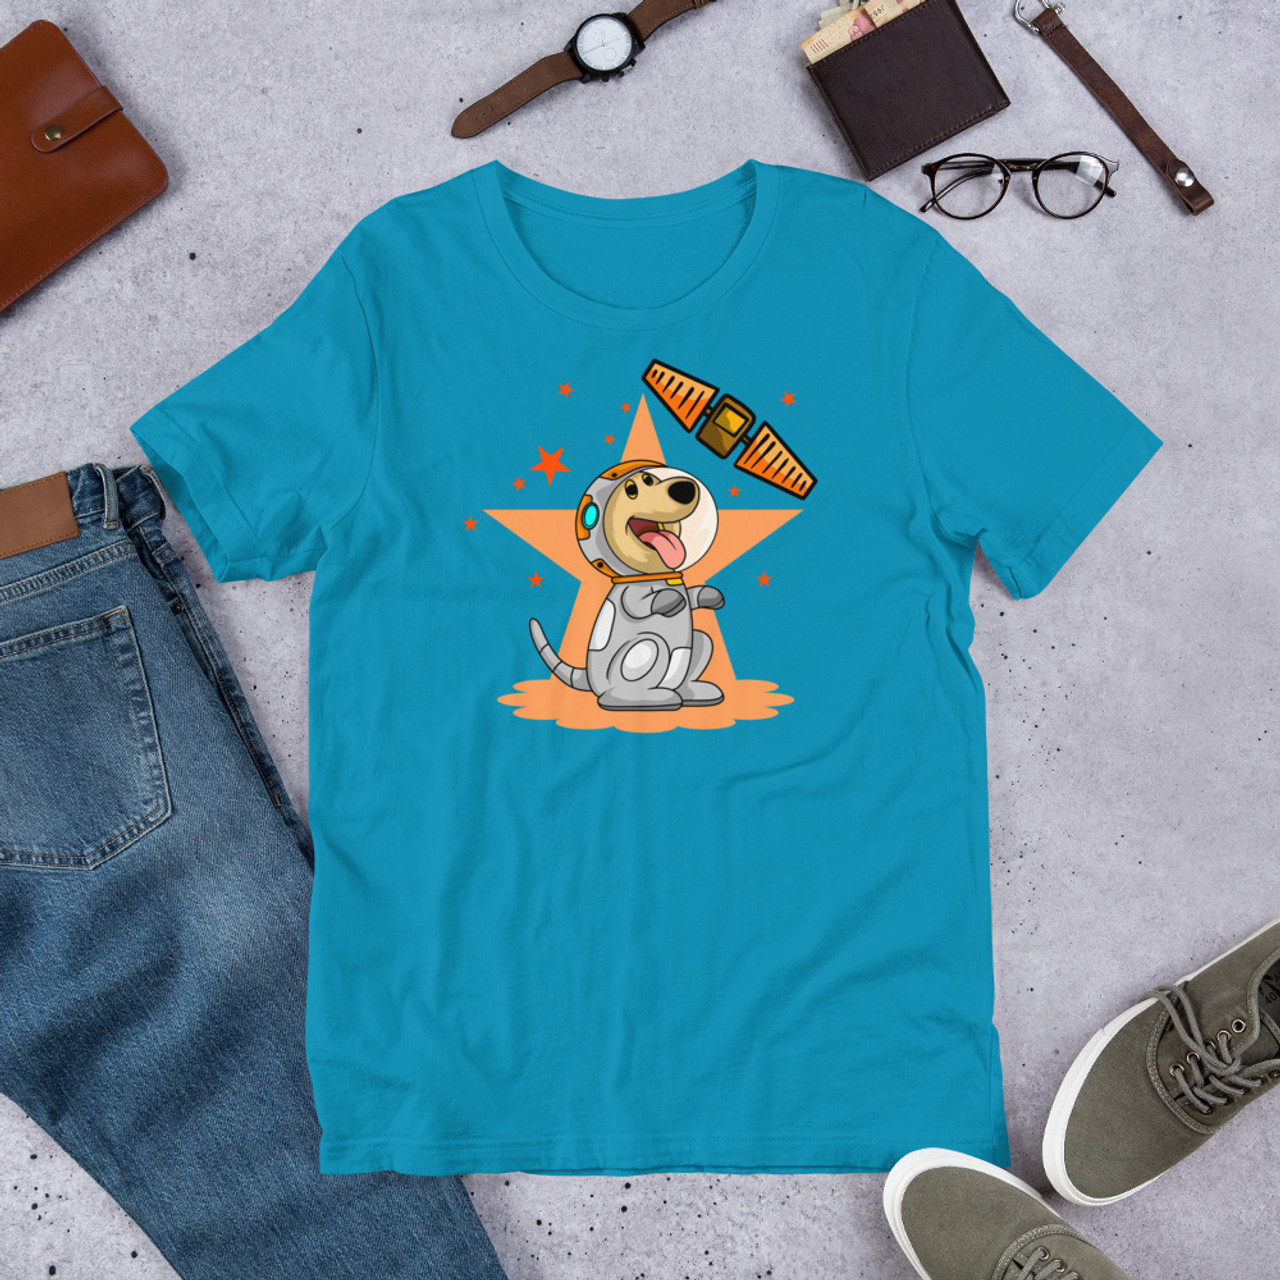 Aqua T-Shirt - Bella + Canvas 3001 Satellite Star Dog